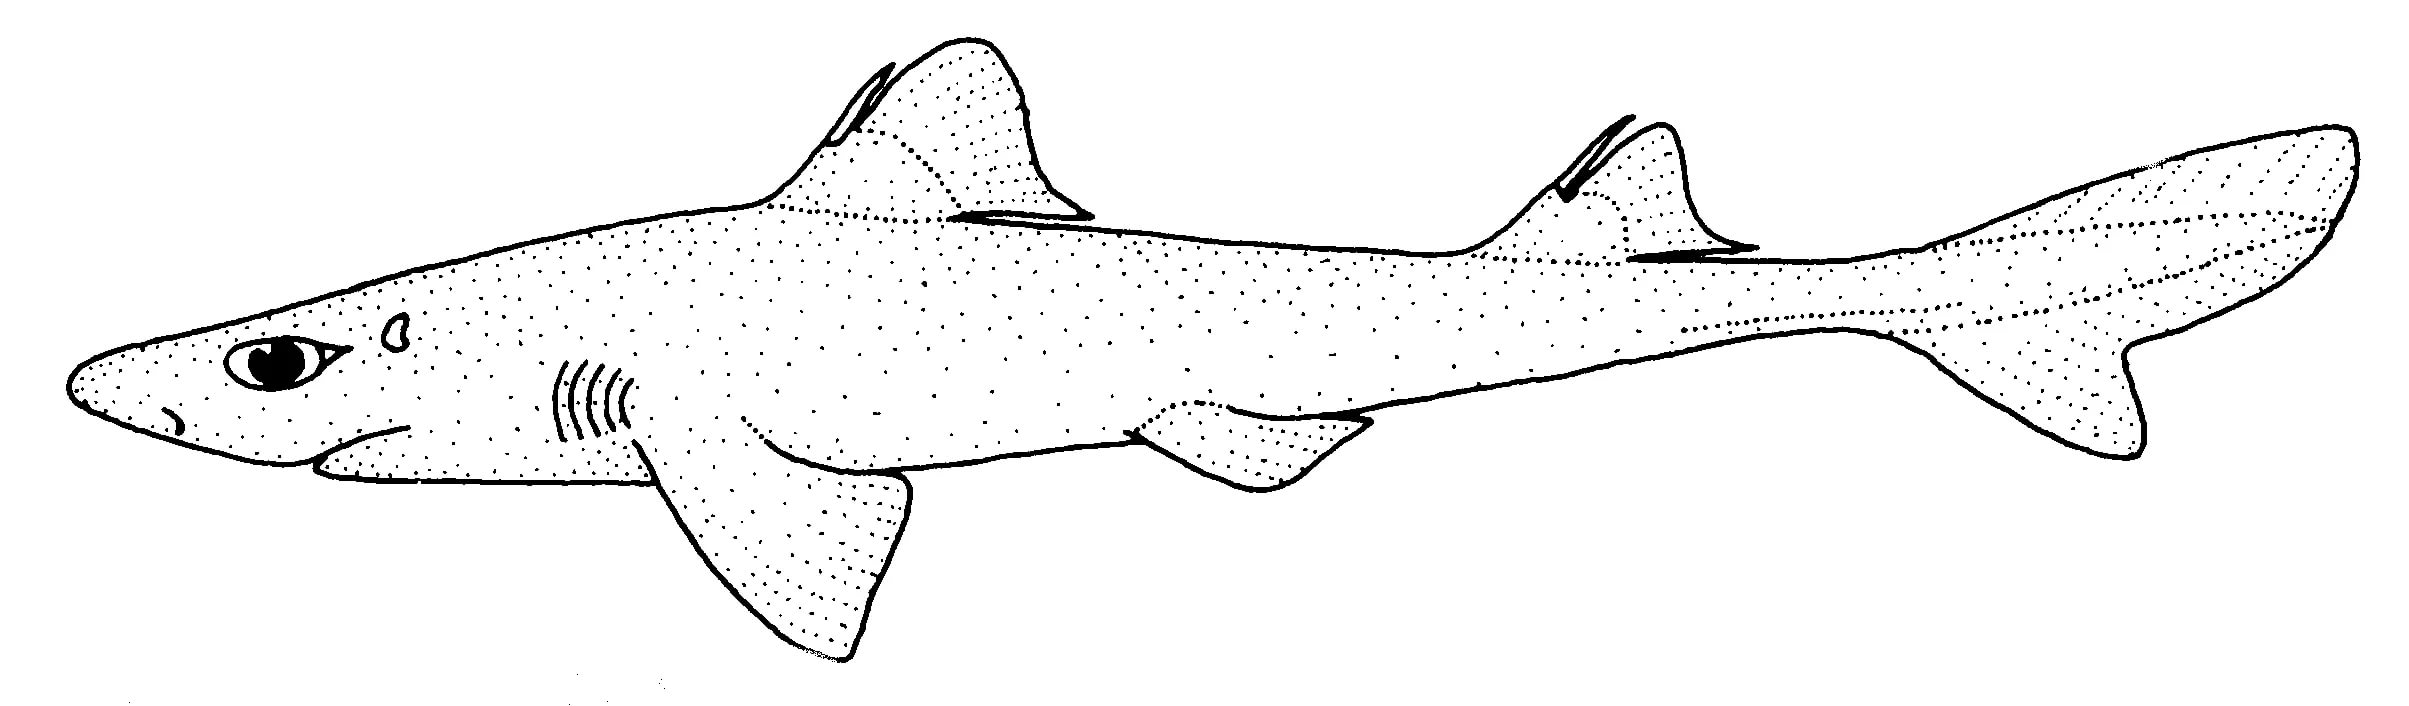 Акула Катран рисунок